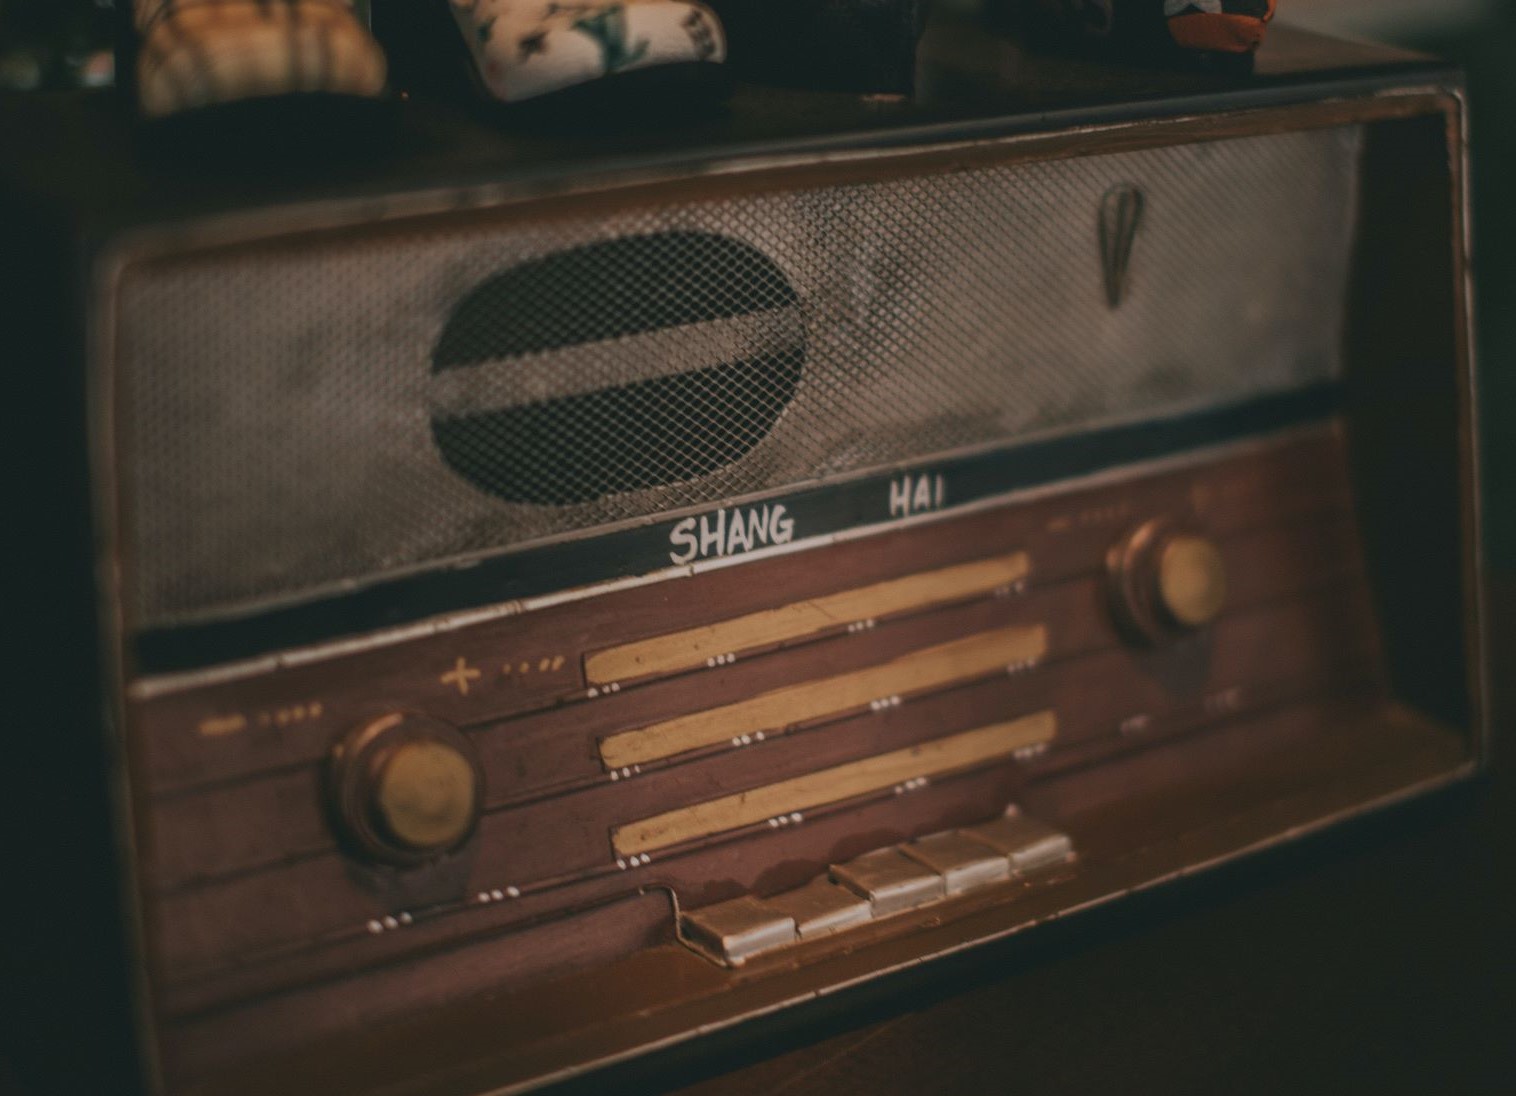 Vintage radio - image by Firdaus Roslan on Unsplash